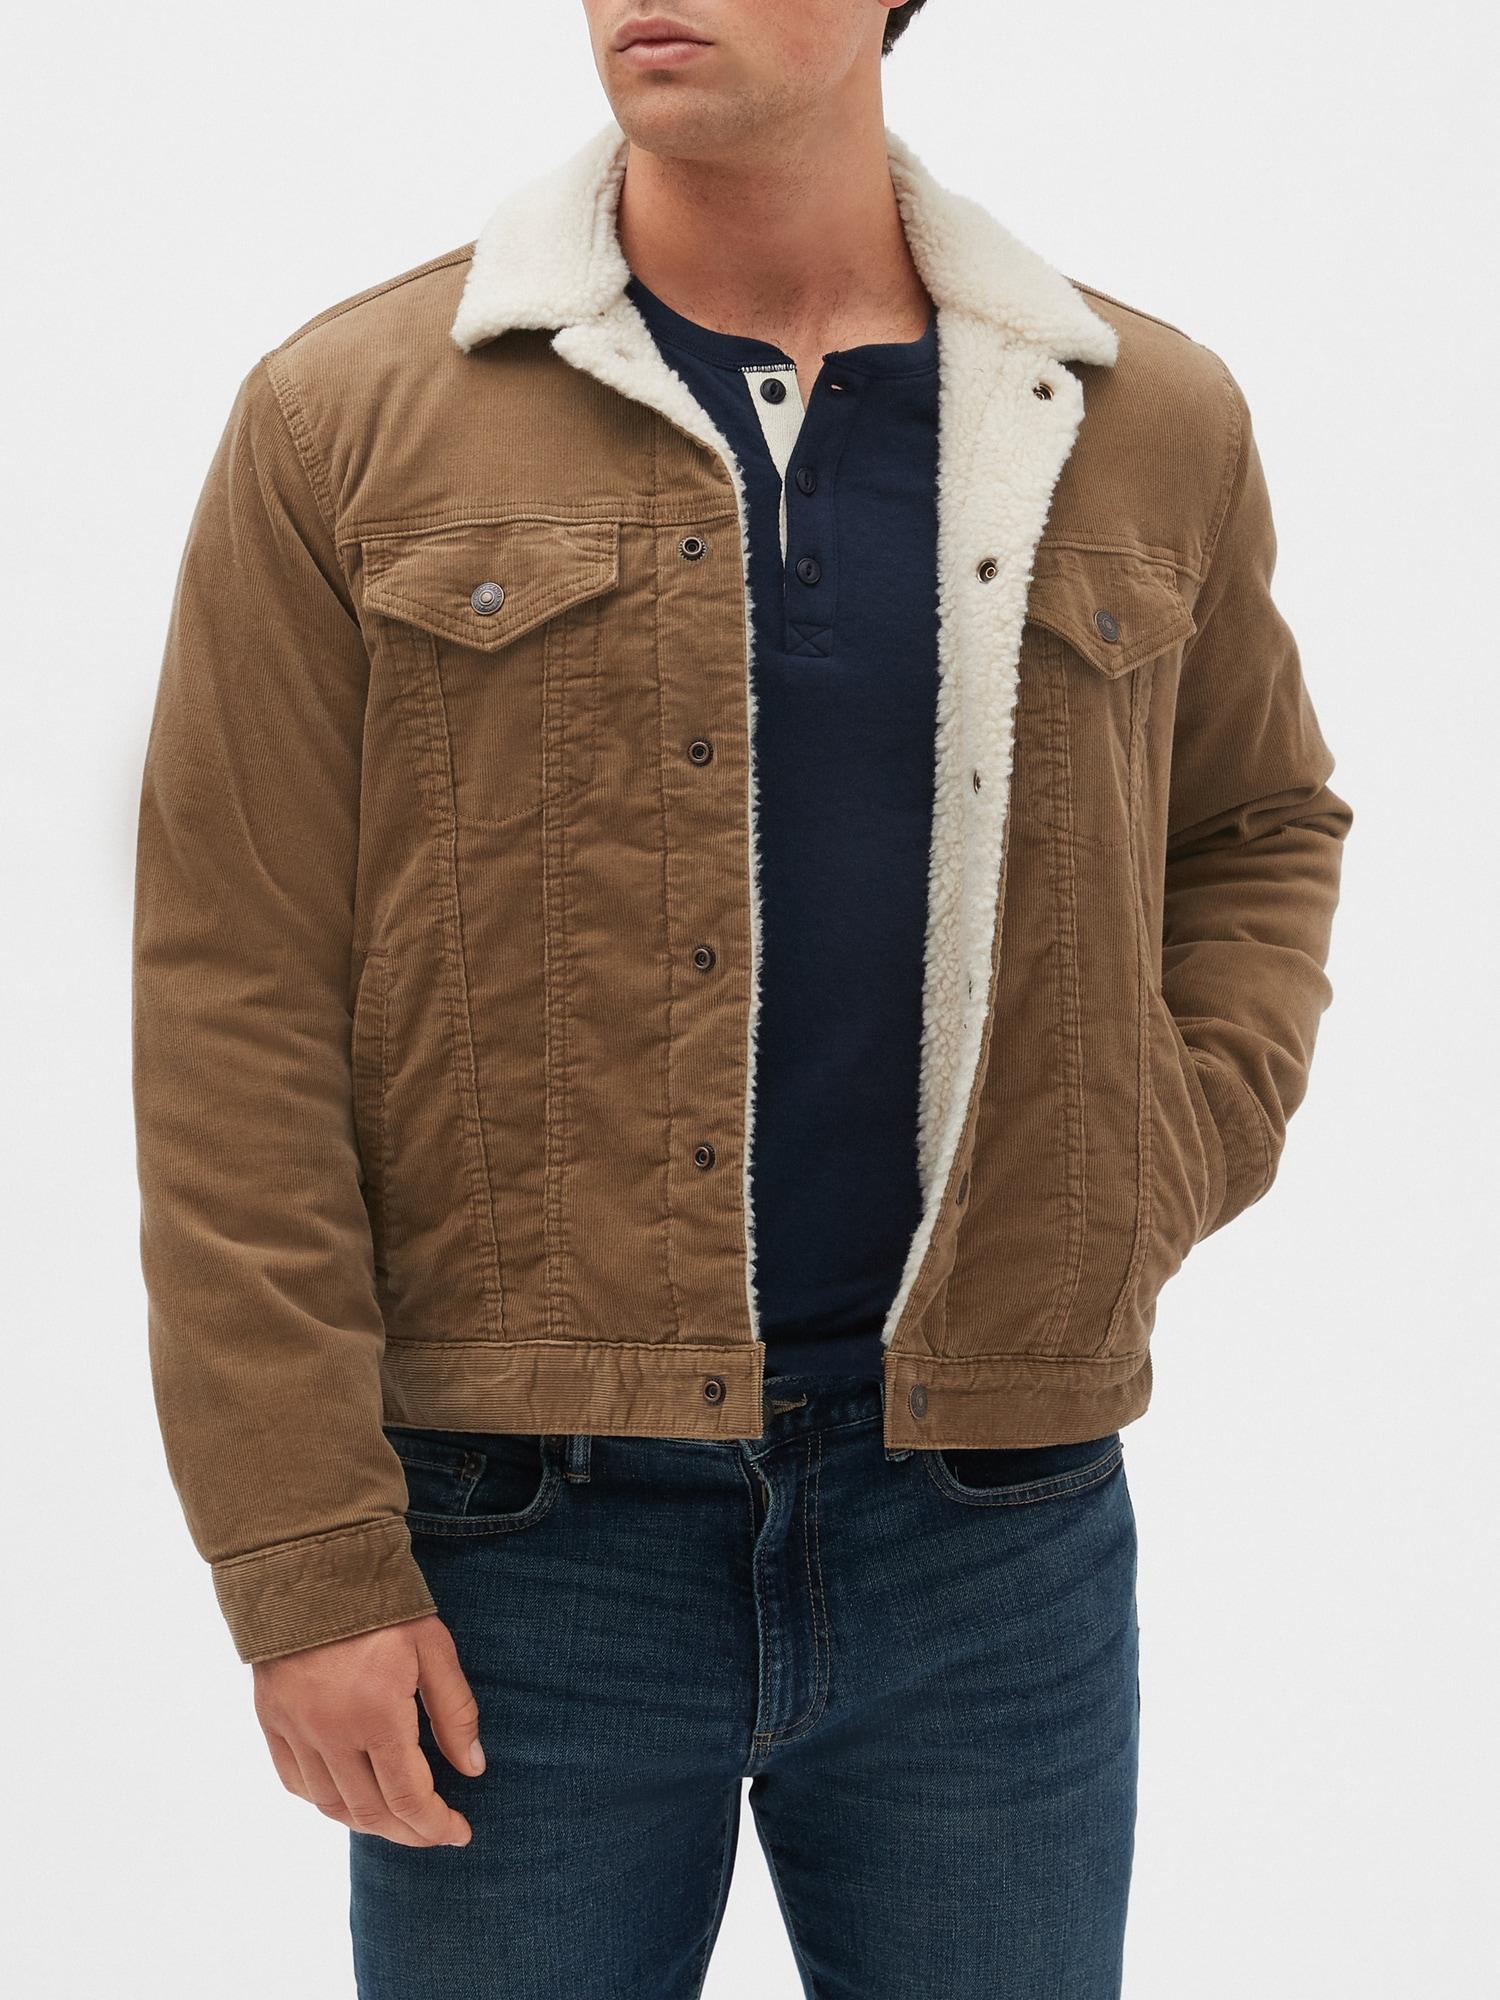 gap sherpa lined corduroy jacket